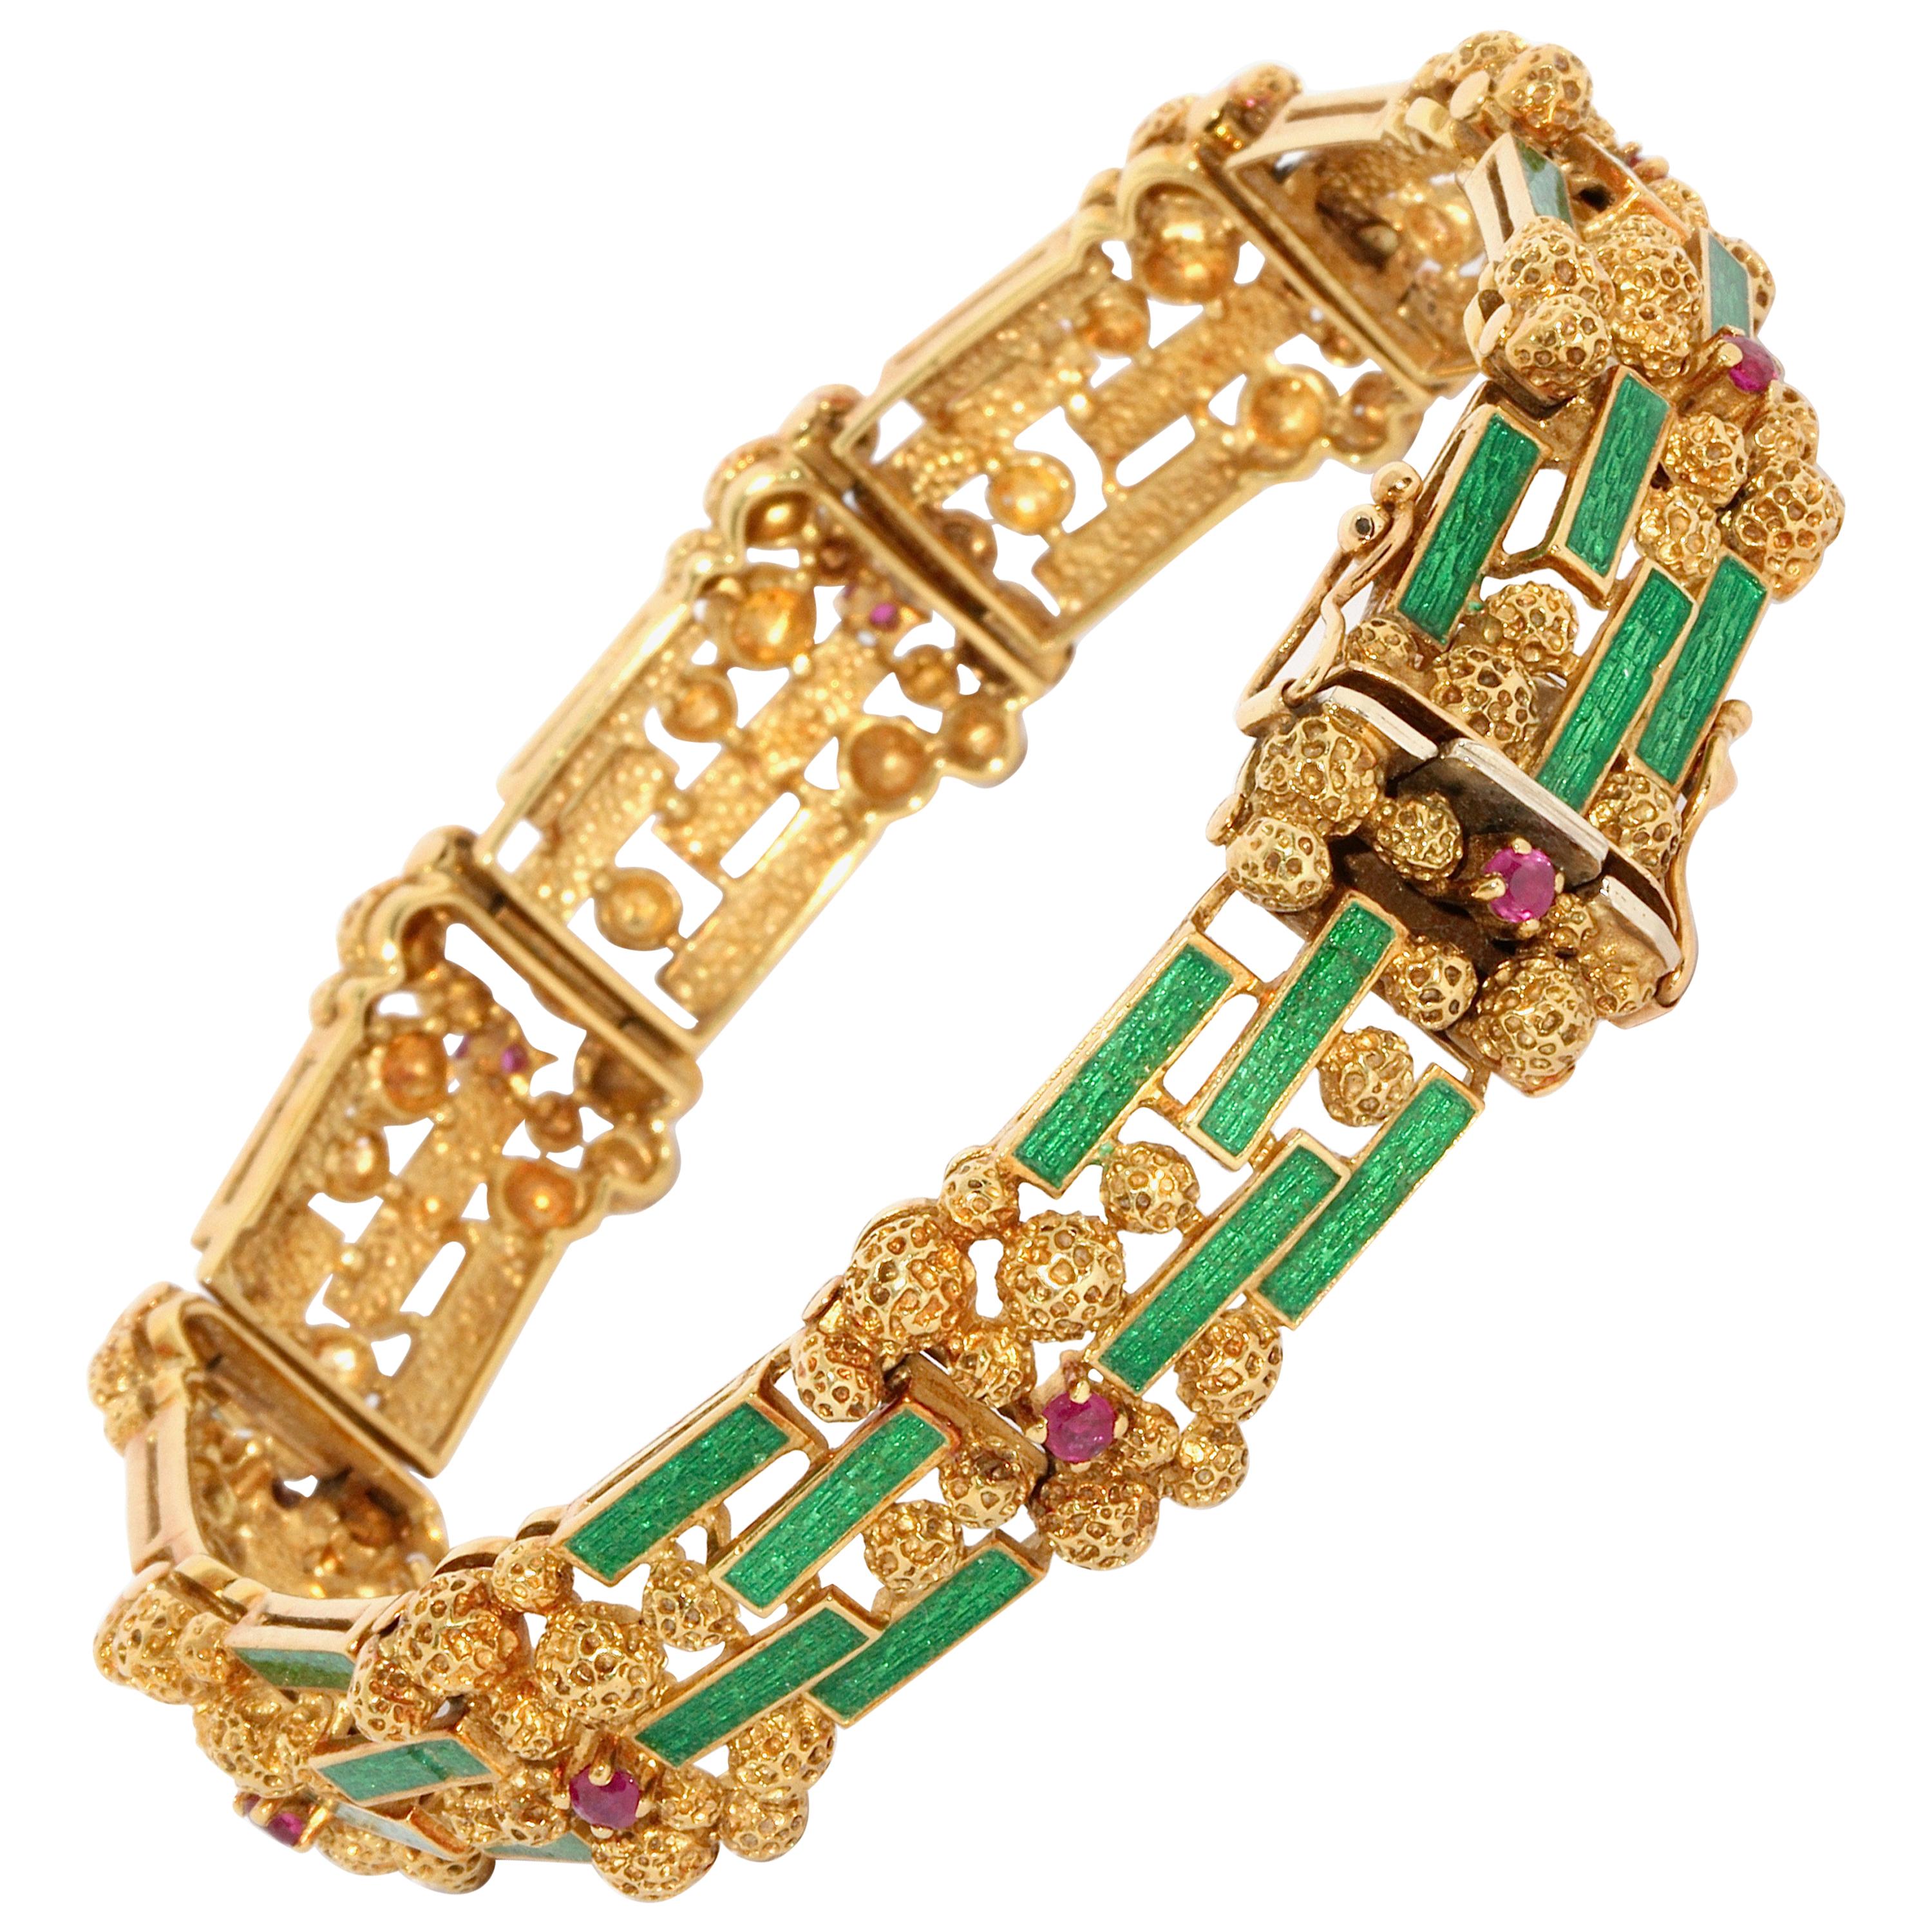 Ladies Nugget Gold Bracelet, 18 Karat, Set with Green Enamel and Rubies